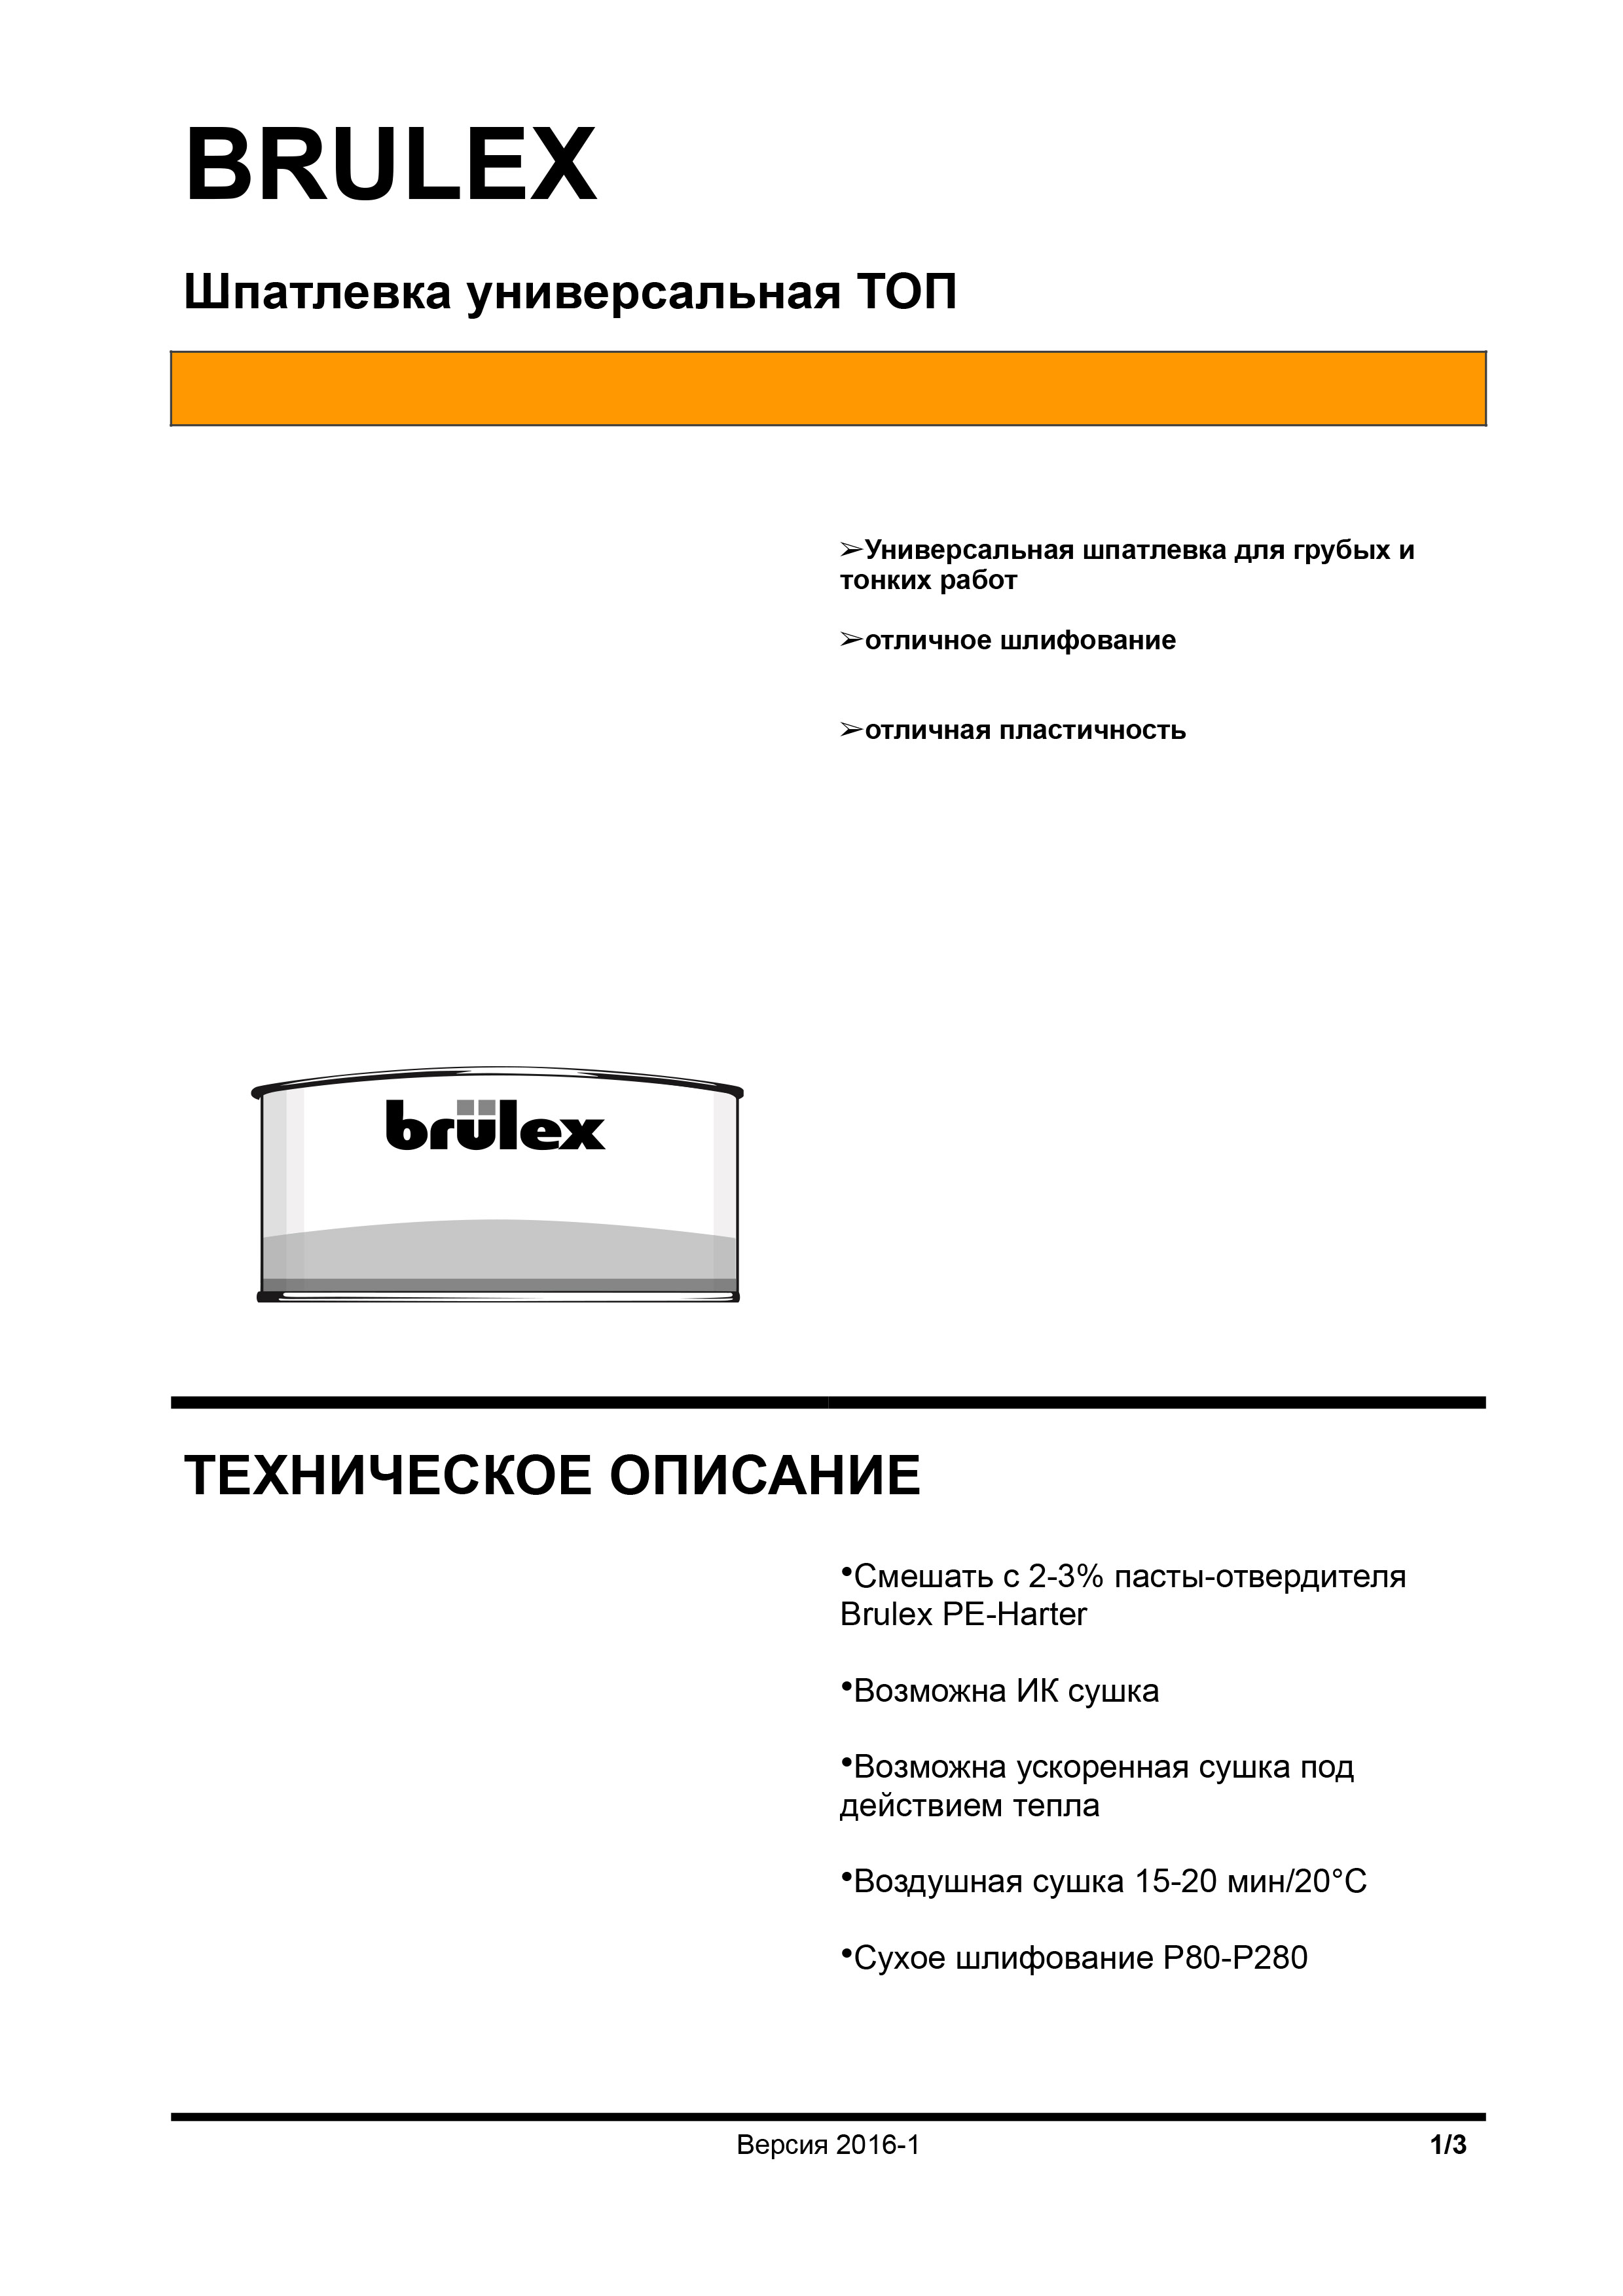 Шпатлевка BRULEX РЕ ТОР 1,8 кг - стандарт